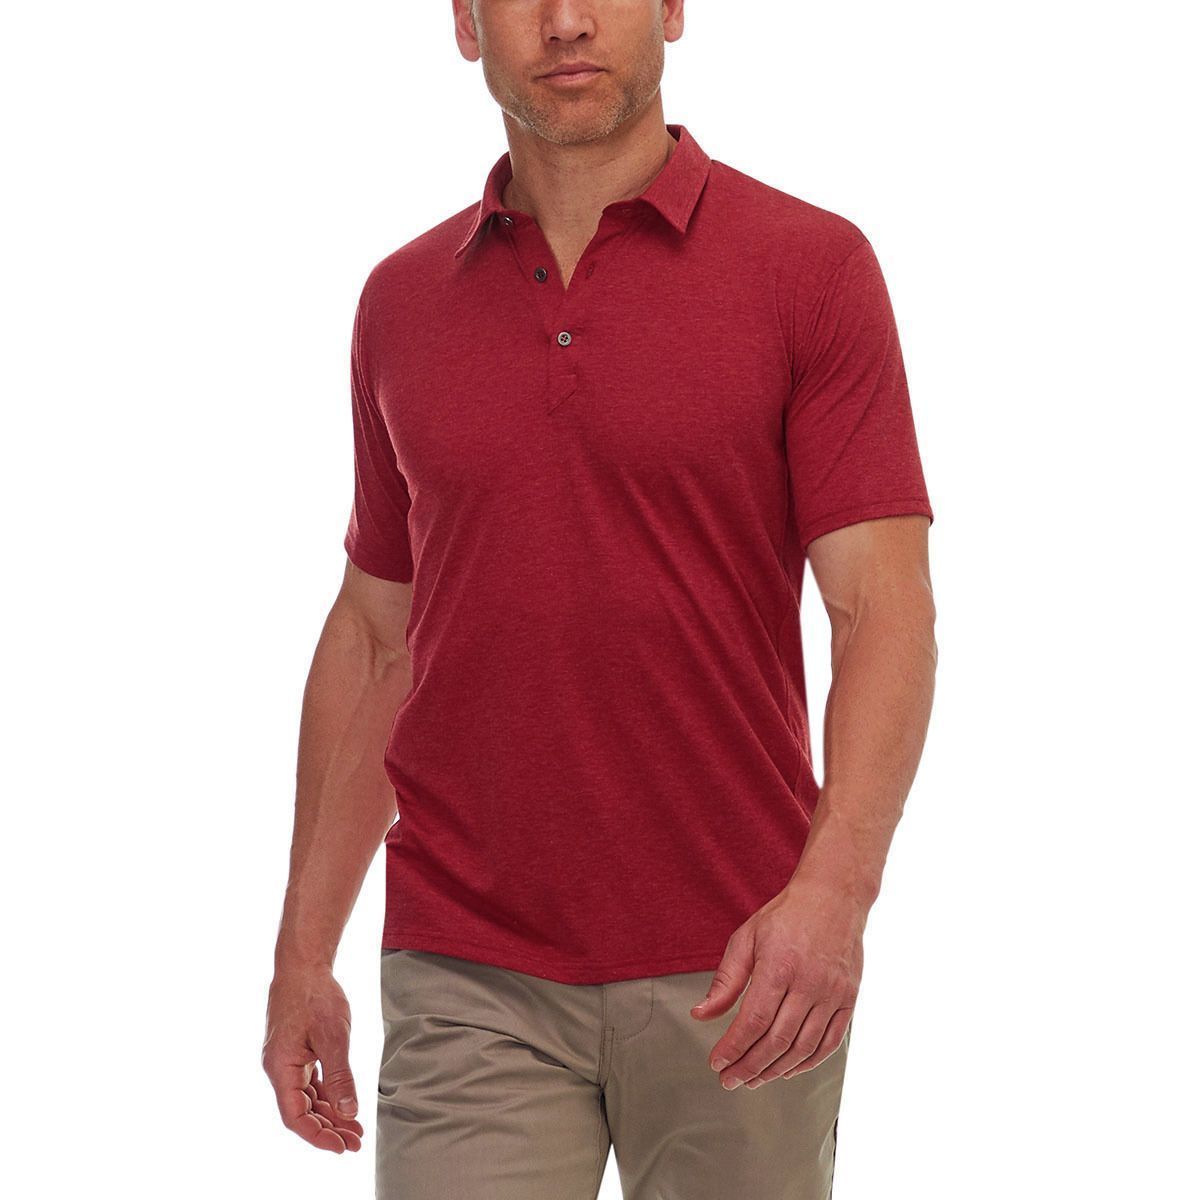 Basin and Range Meadows DriRelease Polo Shirt - Men's